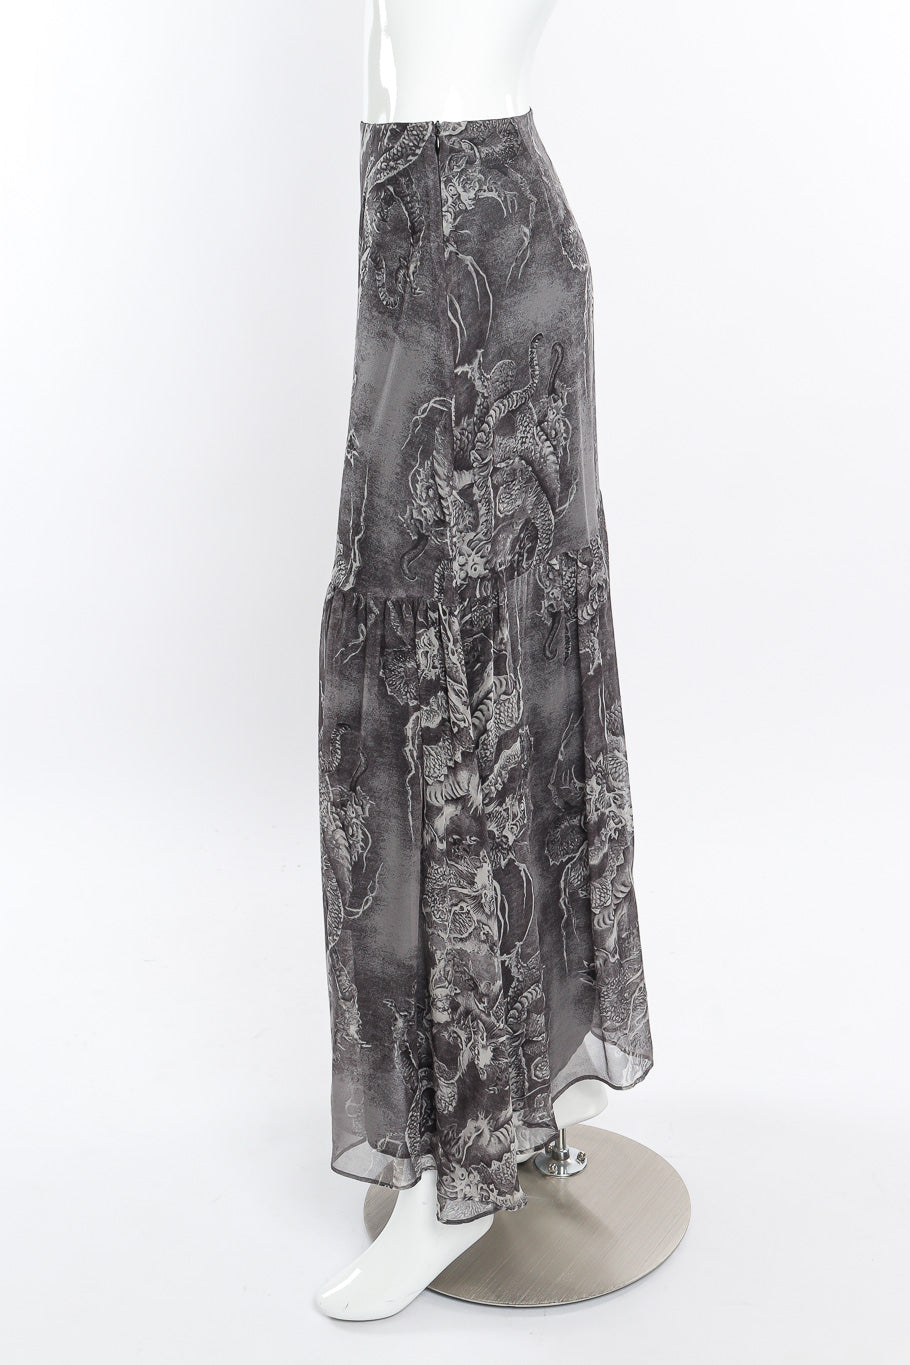 Kenzo Dragon Print Silk Skirt side view on mannequin @Recessla